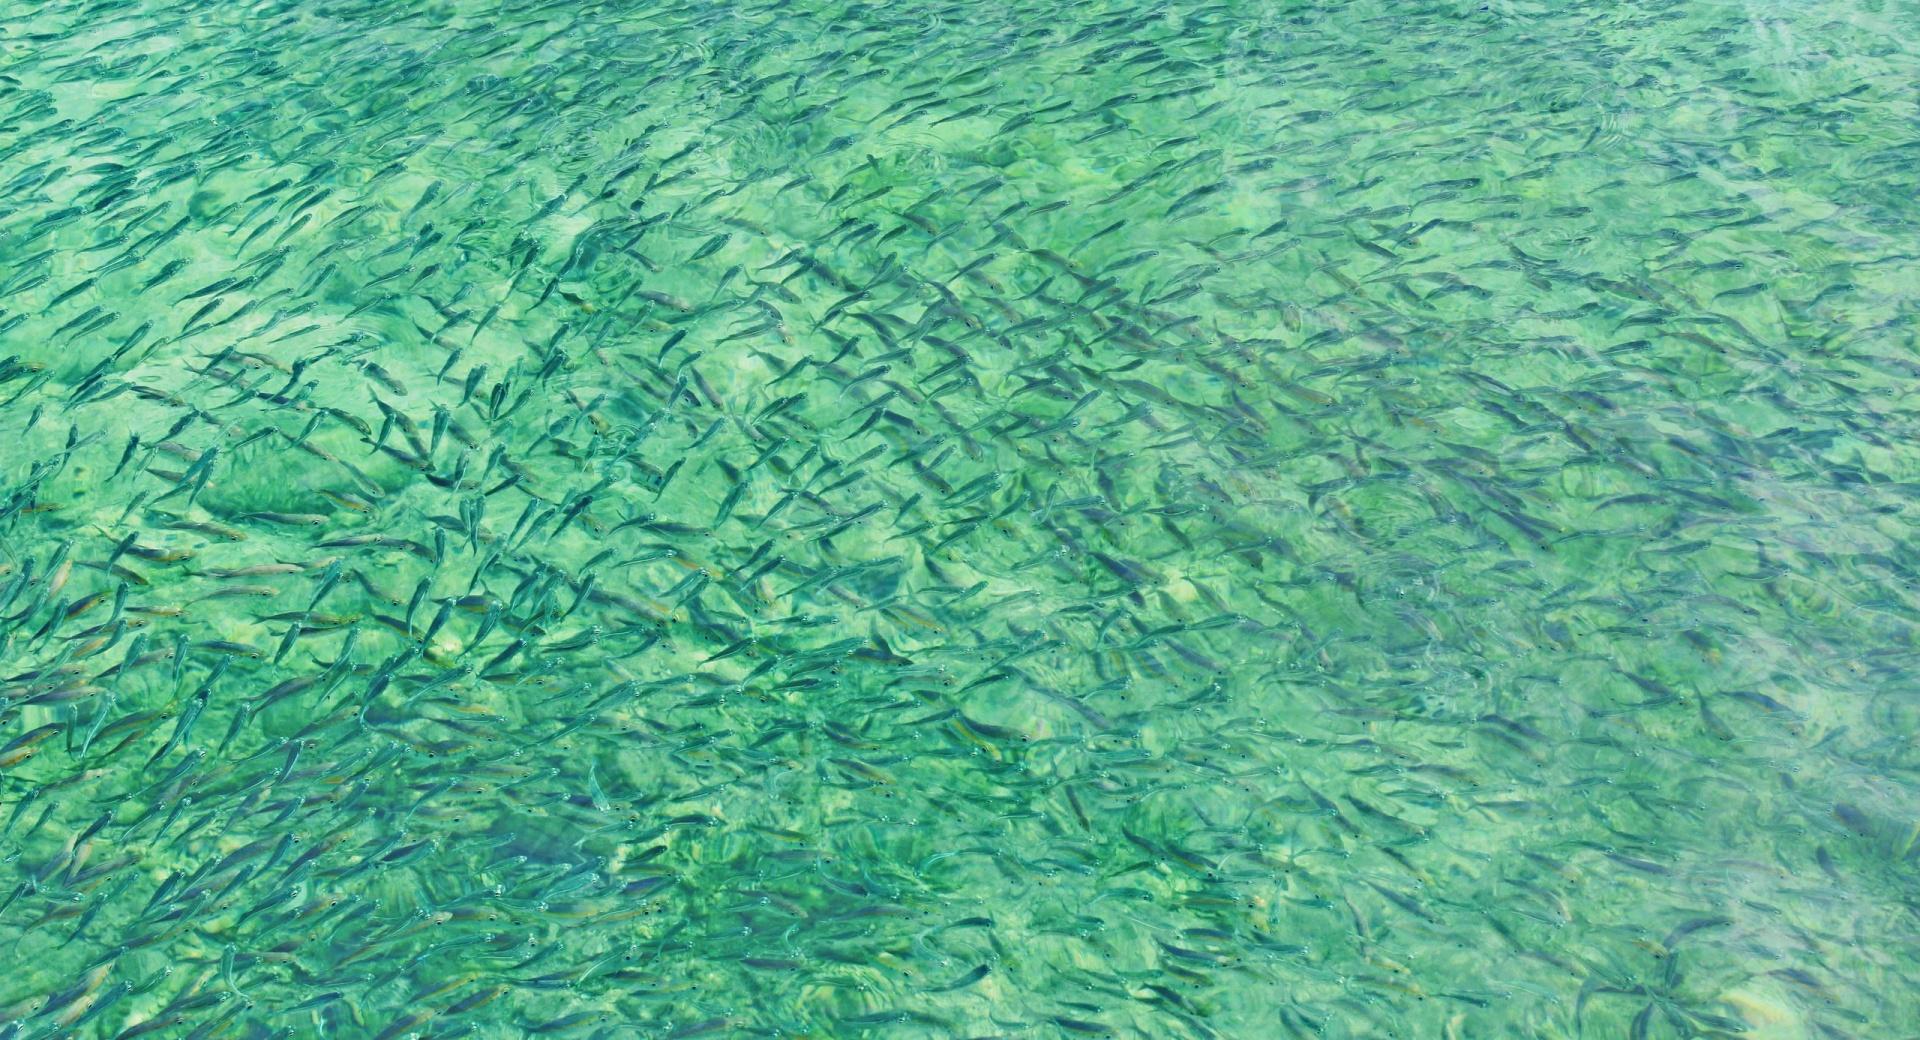 Ikan Ikan Kecil at 640 x 1136 iPhone 5 size wallpapers HD quality